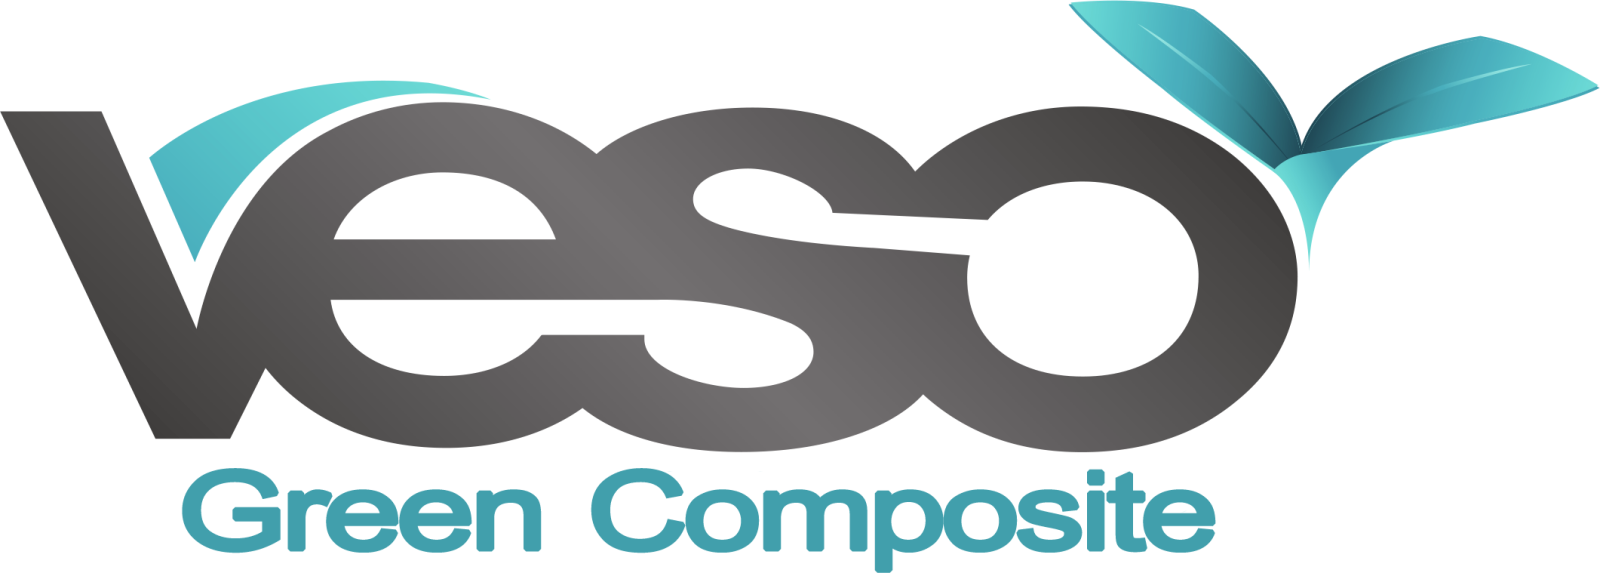 Logotype_VESO_CONCEPT